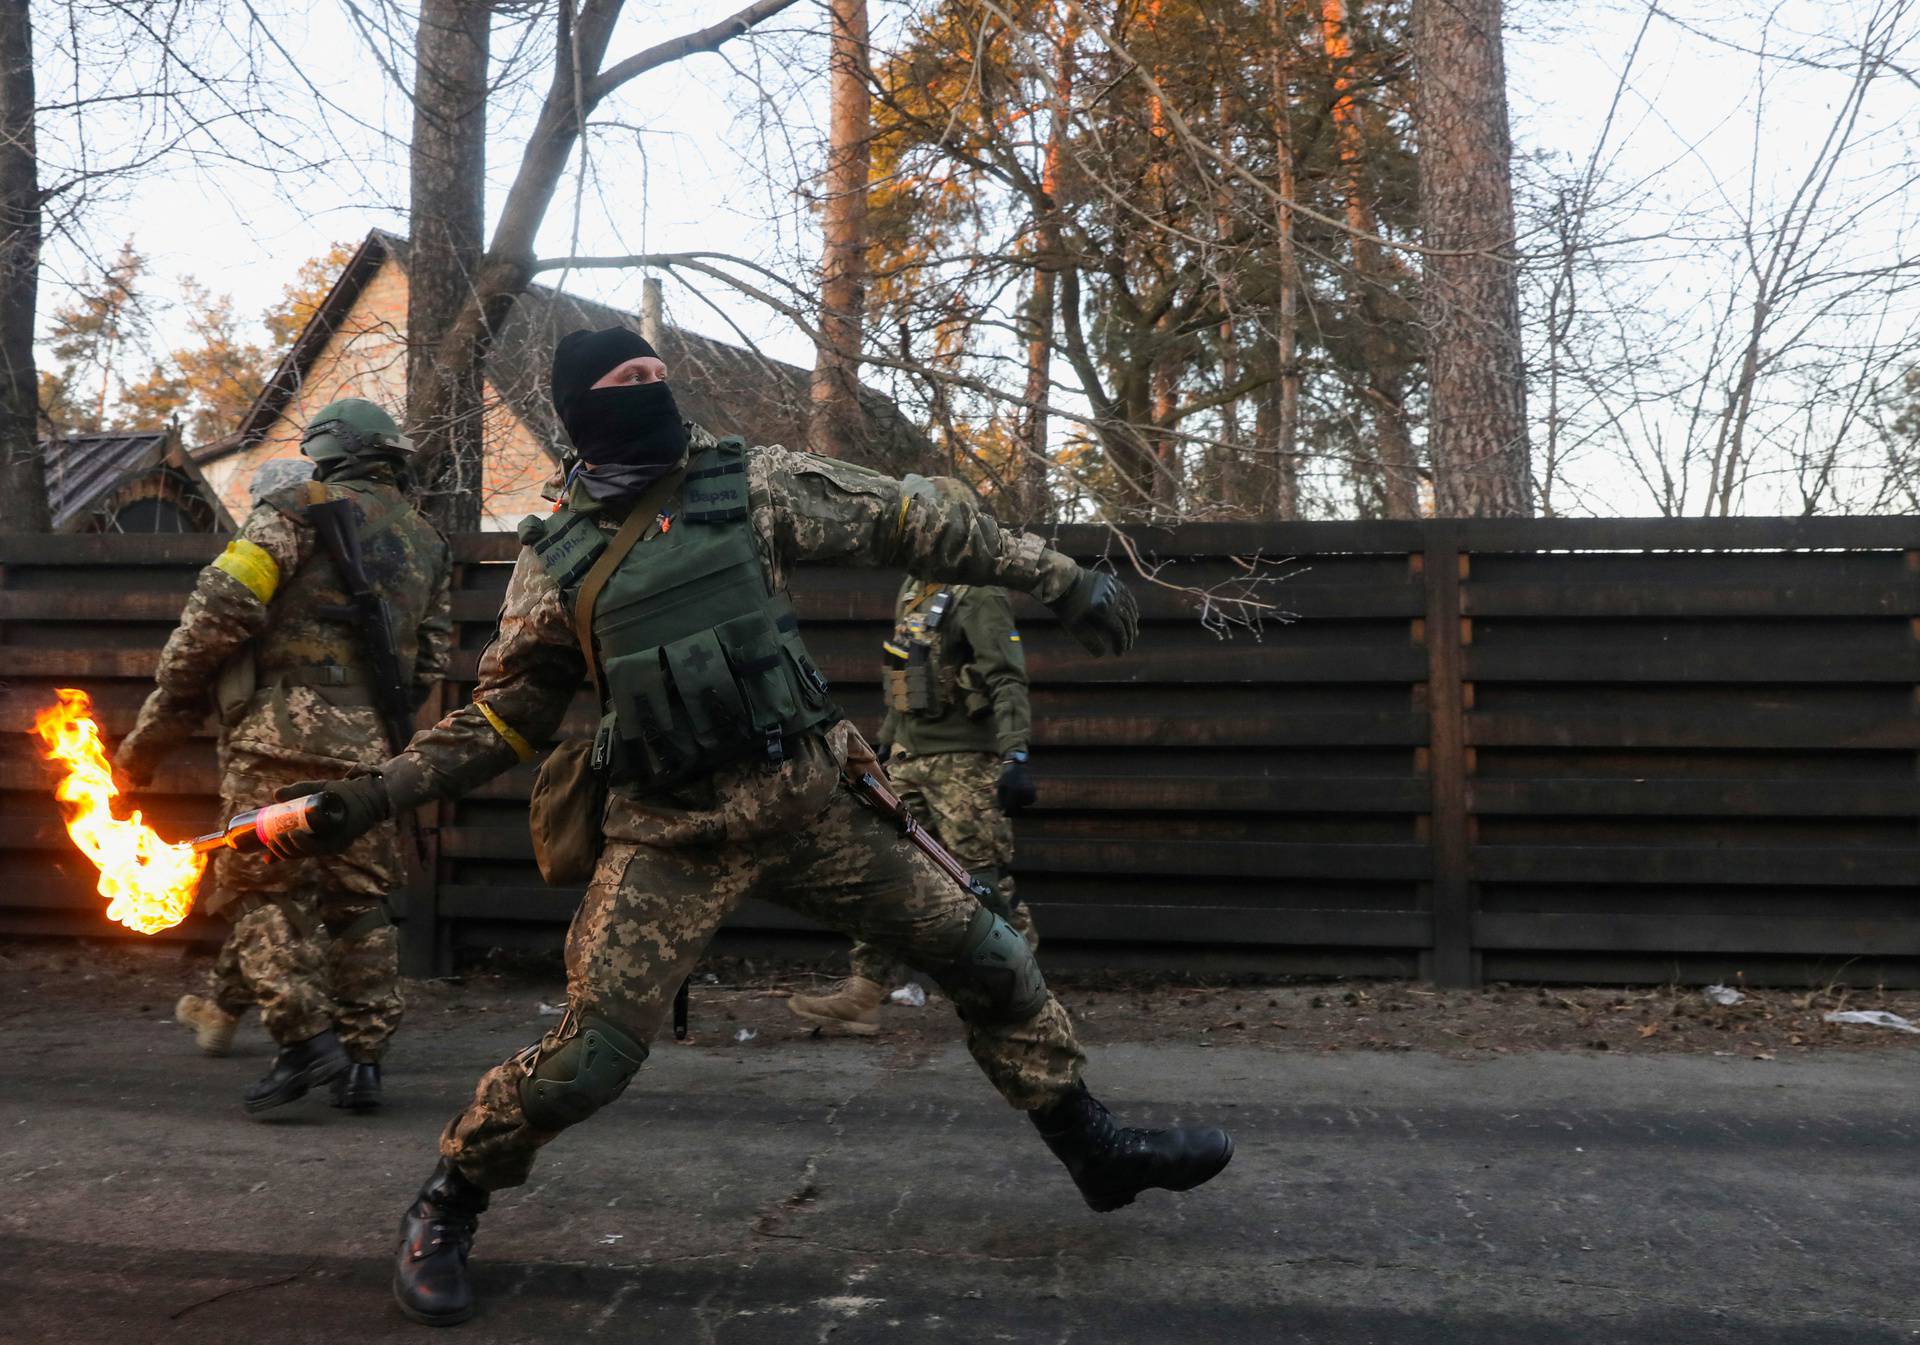 Russia's invasion of Ukraine continues, in Kyiv